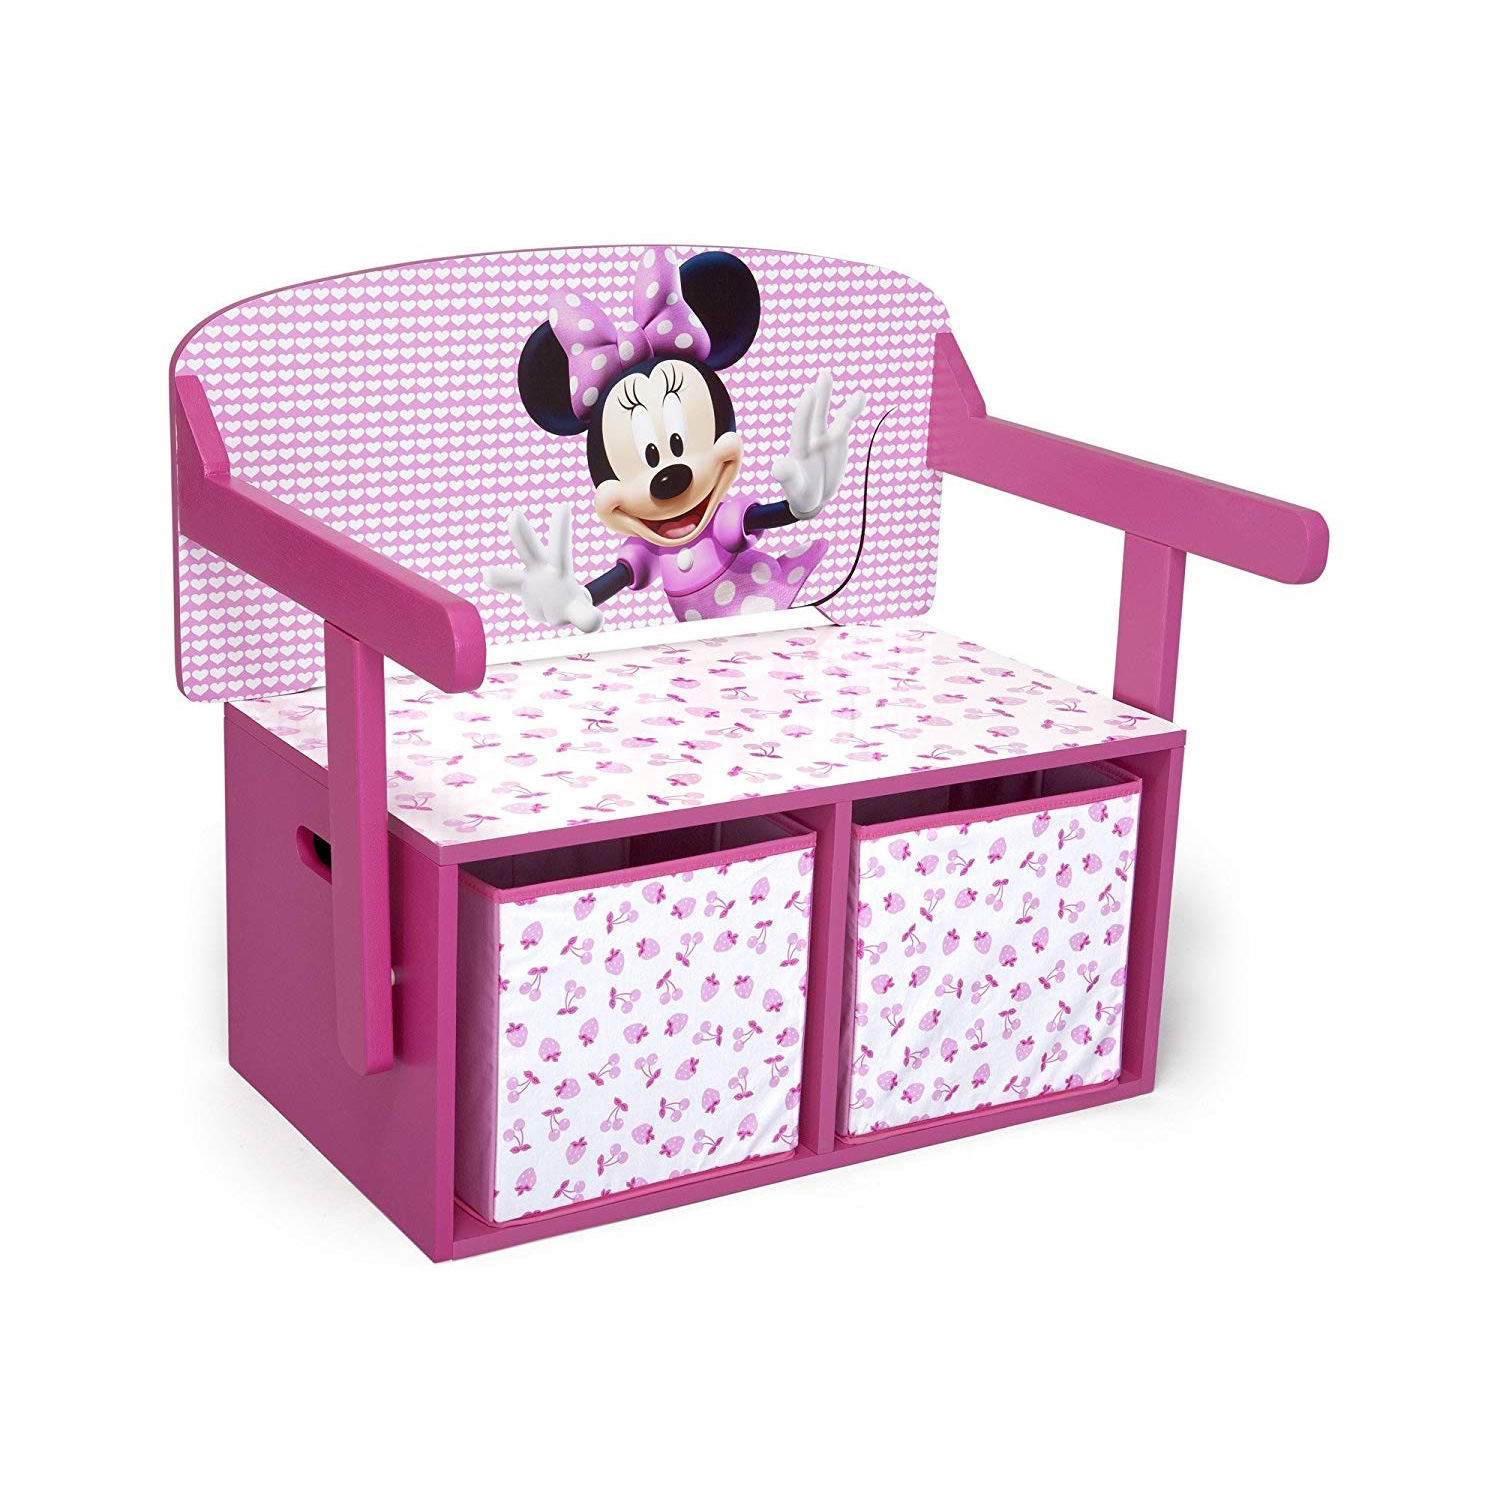 Disney Minnie Mouse 3 In 1 Storage